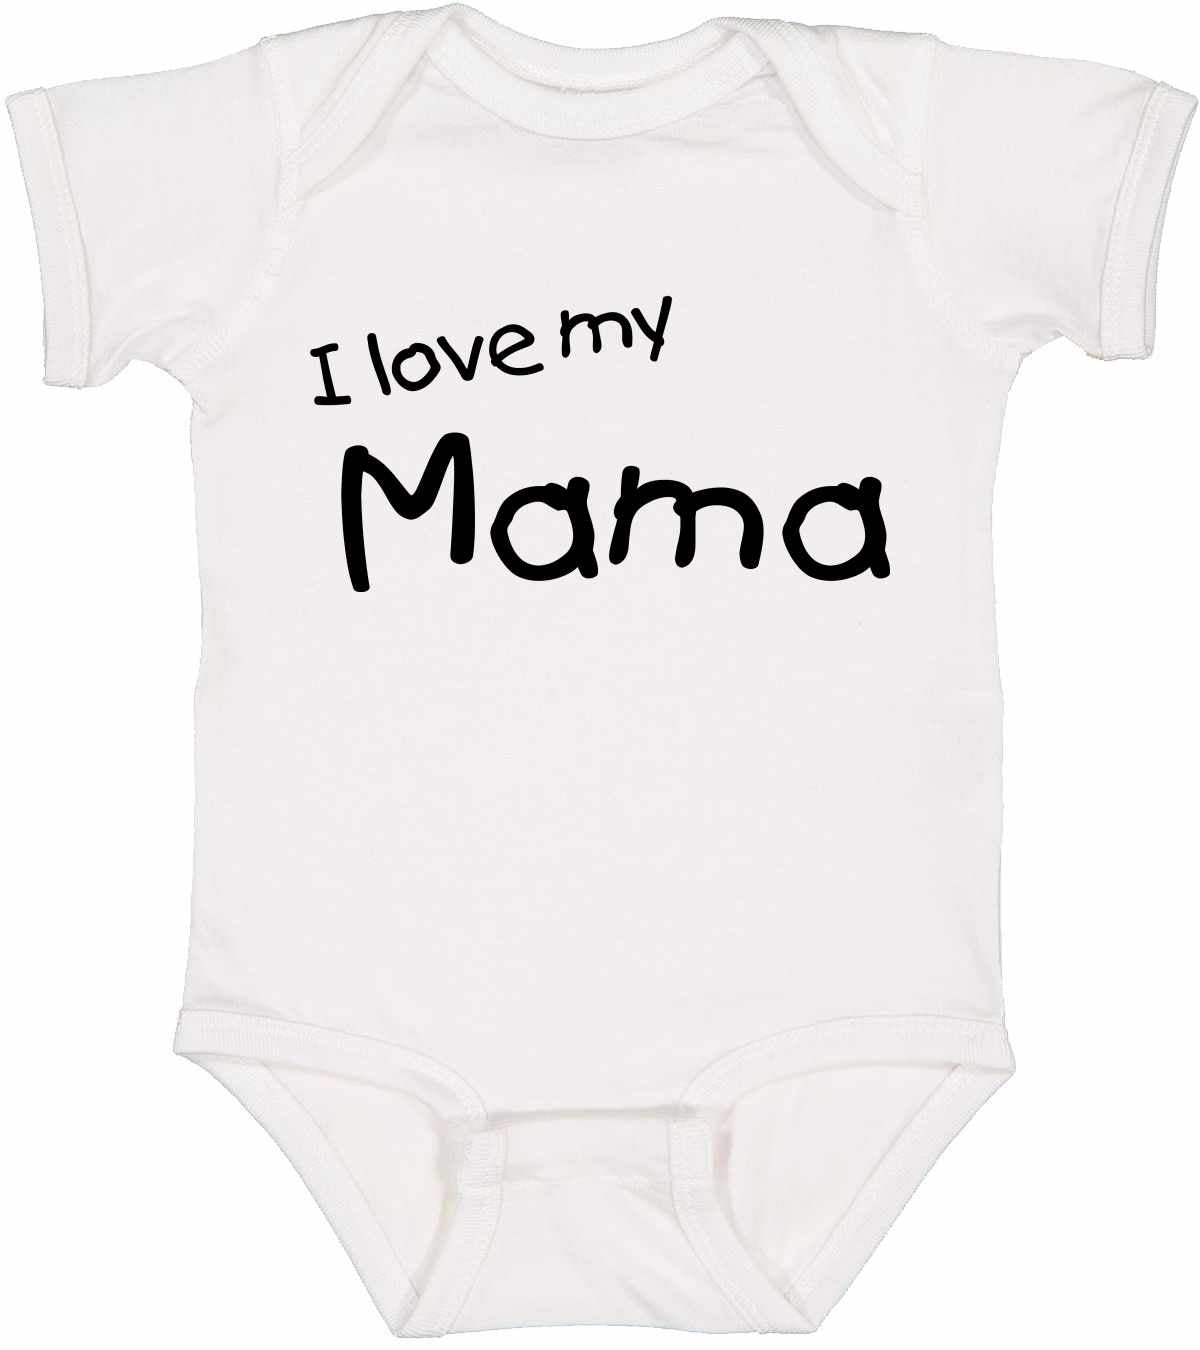 I Love My Mama on Infant BodySuit (#1307-10)